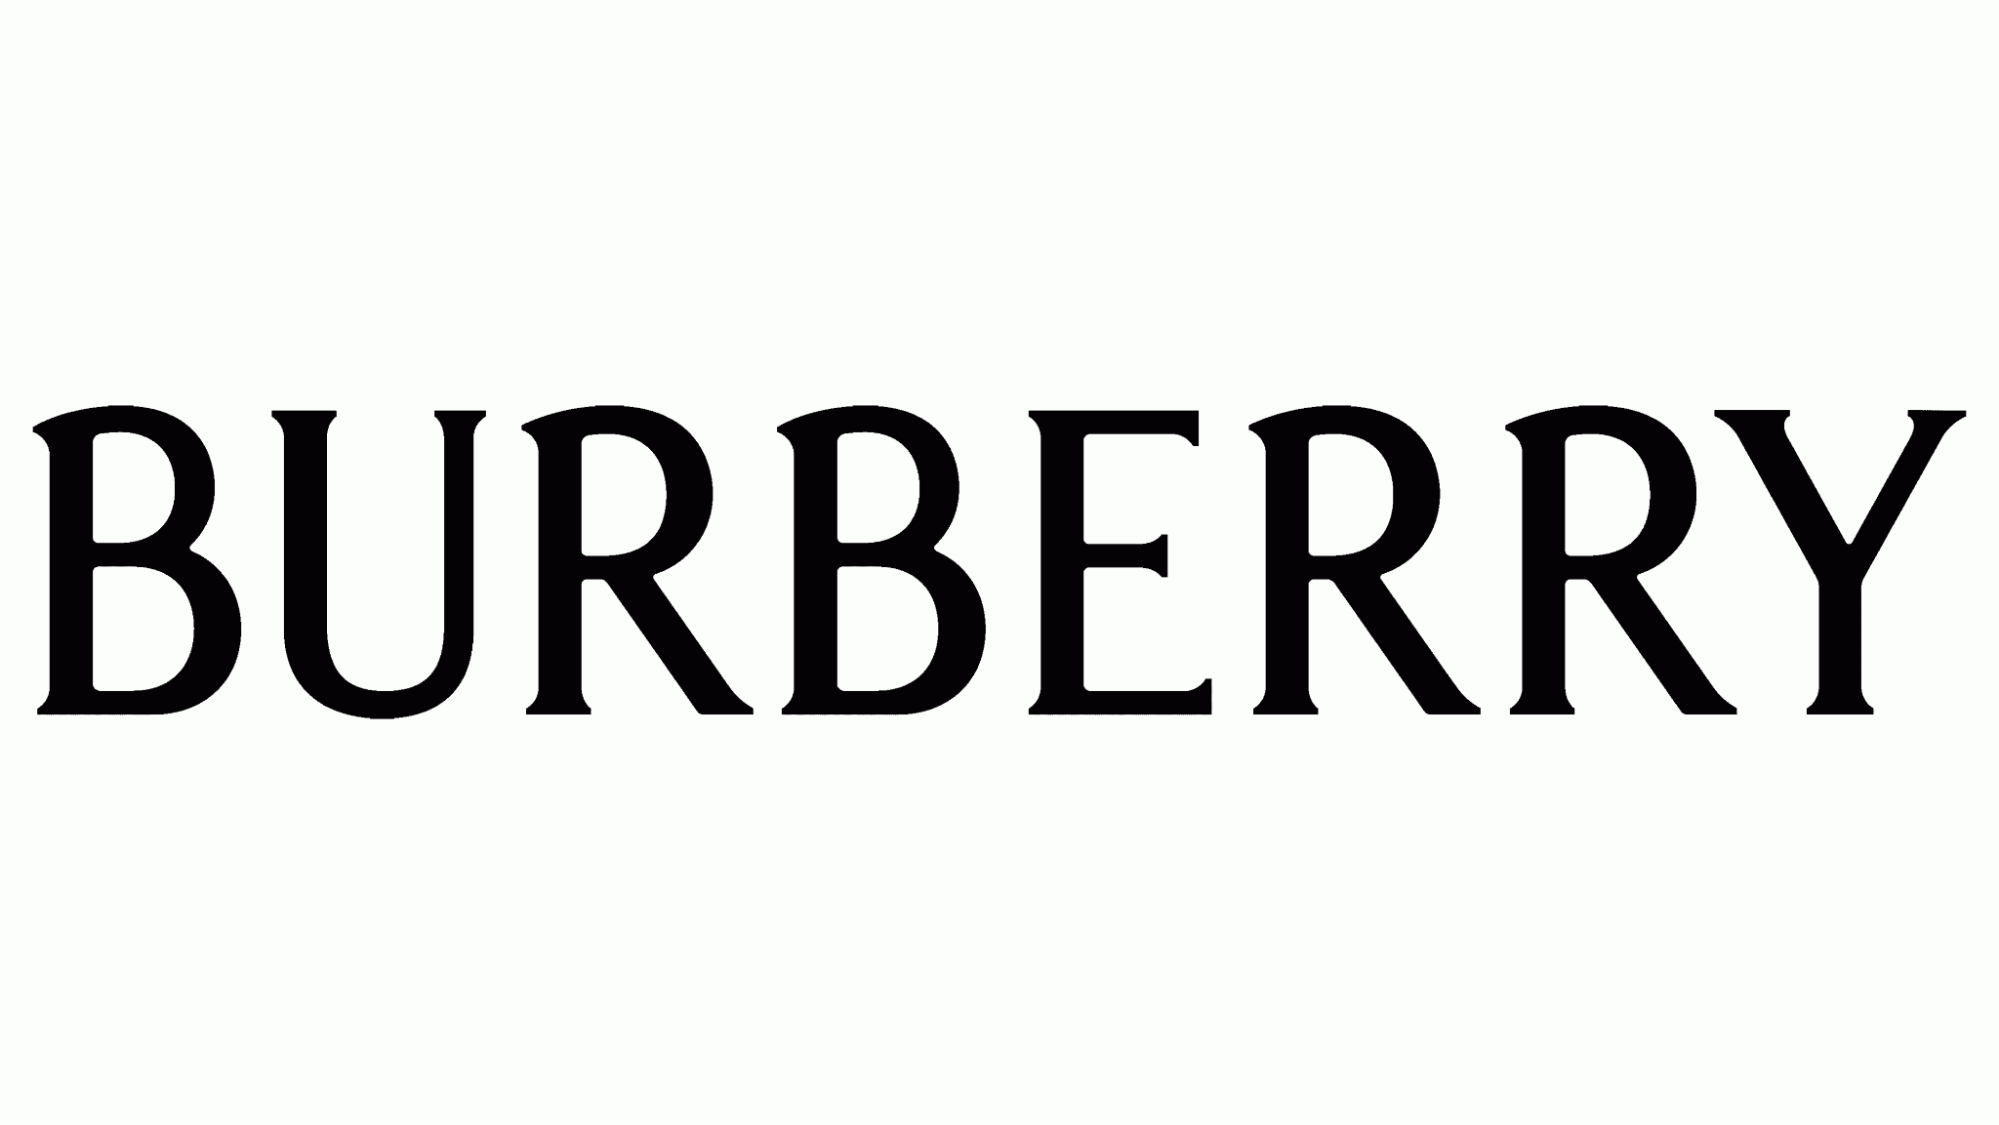 Burberryのロゴマークの変遷と時代 | Swings